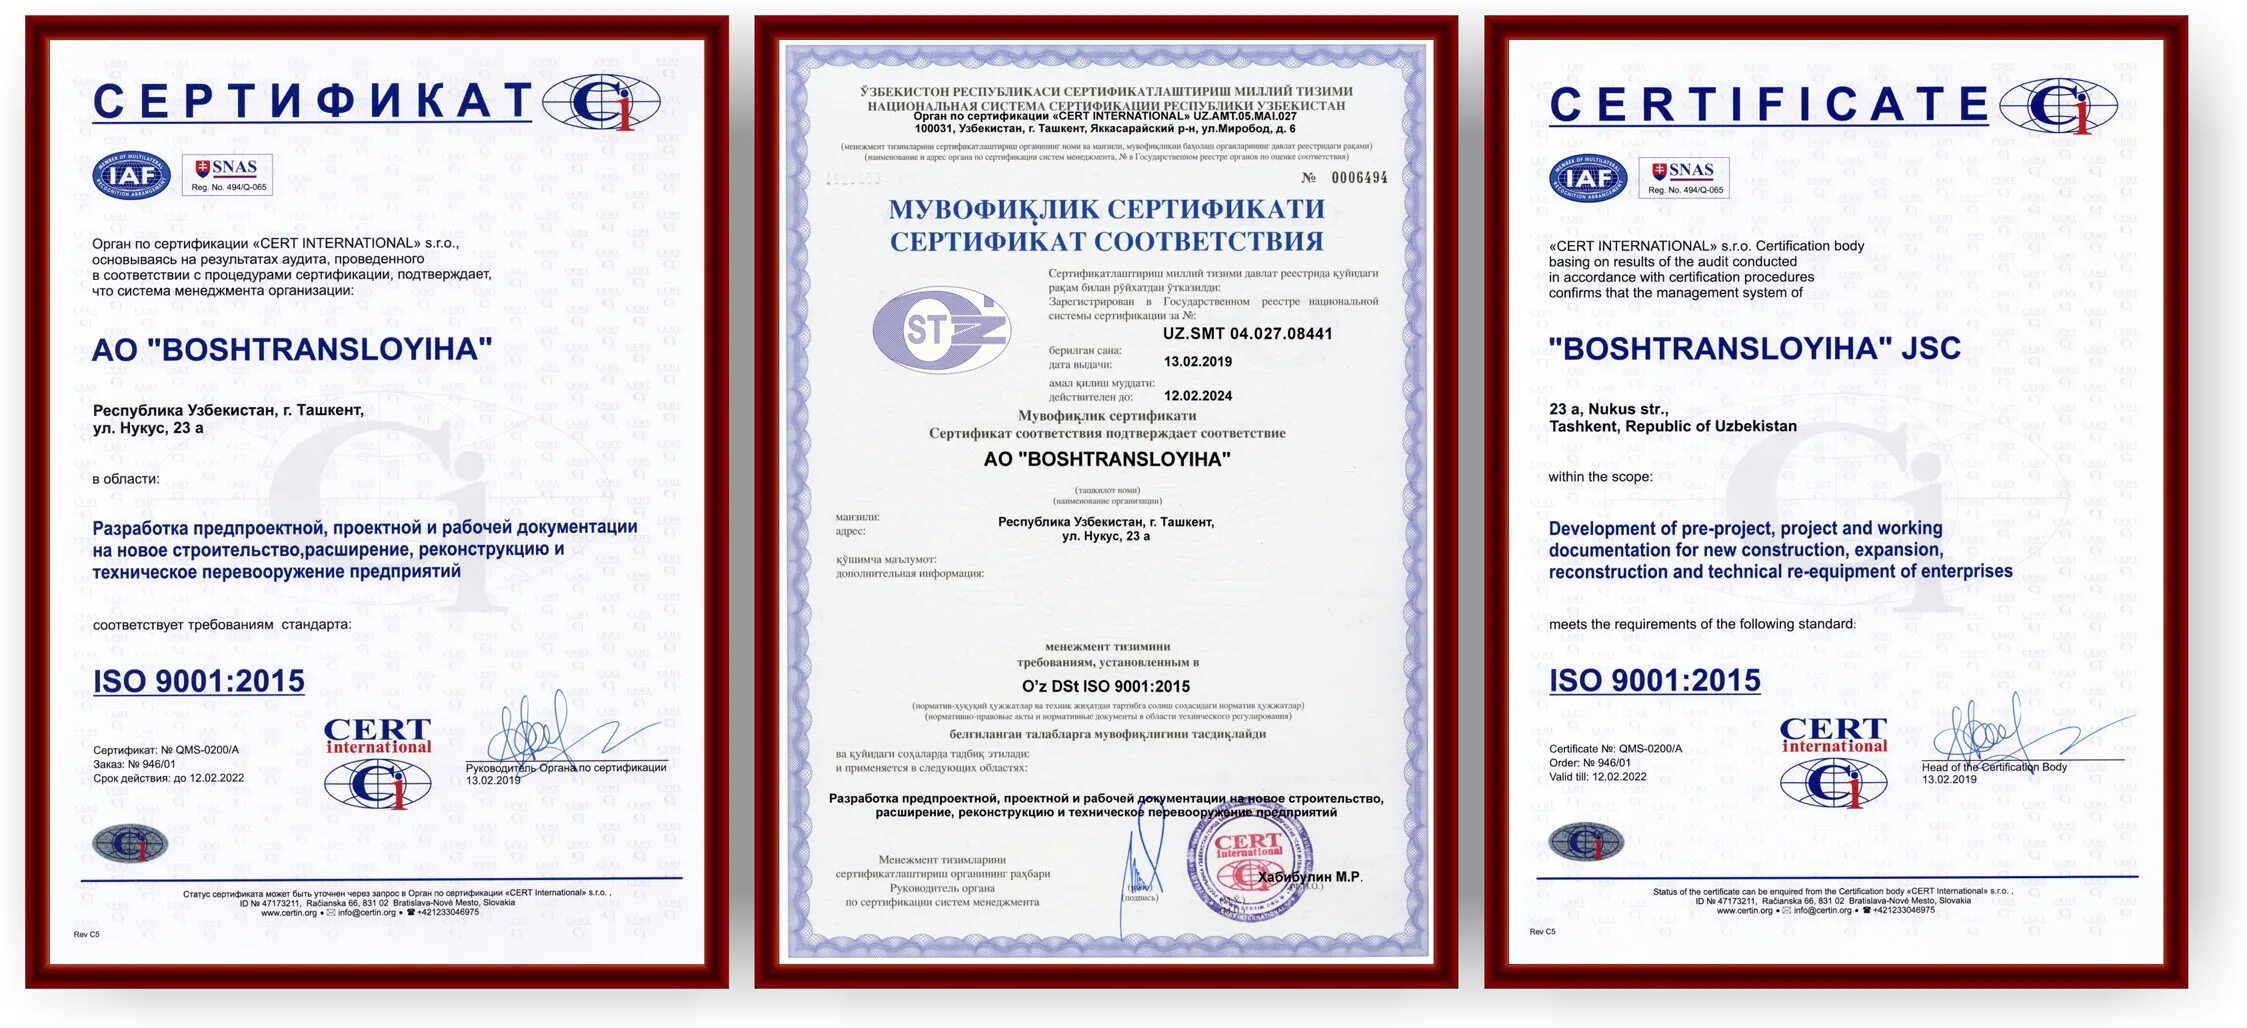 Сертификат ГОСТ Р ИСО 9001. TDM Electric ISO 9001. Сертификат СМК ИСО 9001. Сертификат качества ISO 9001 2000.